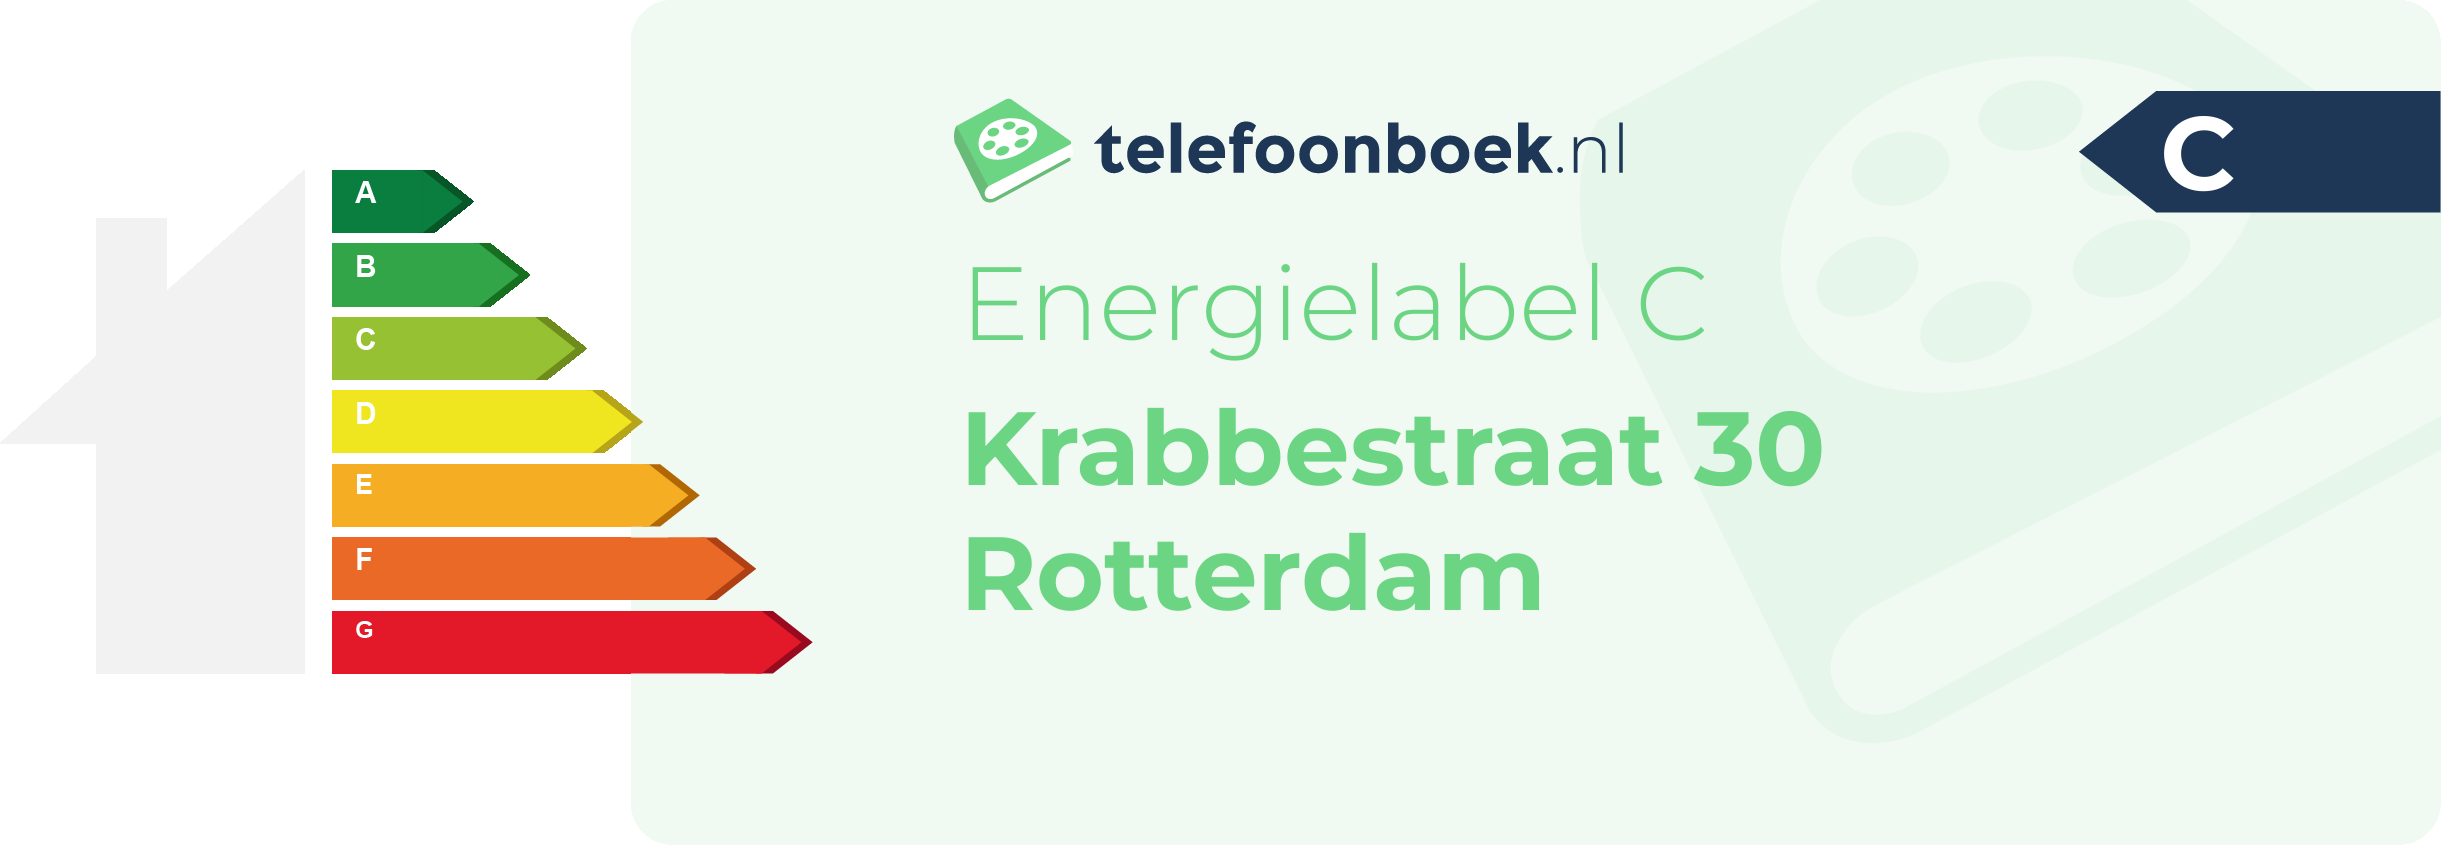 Energielabel Krabbestraat 30 Rotterdam